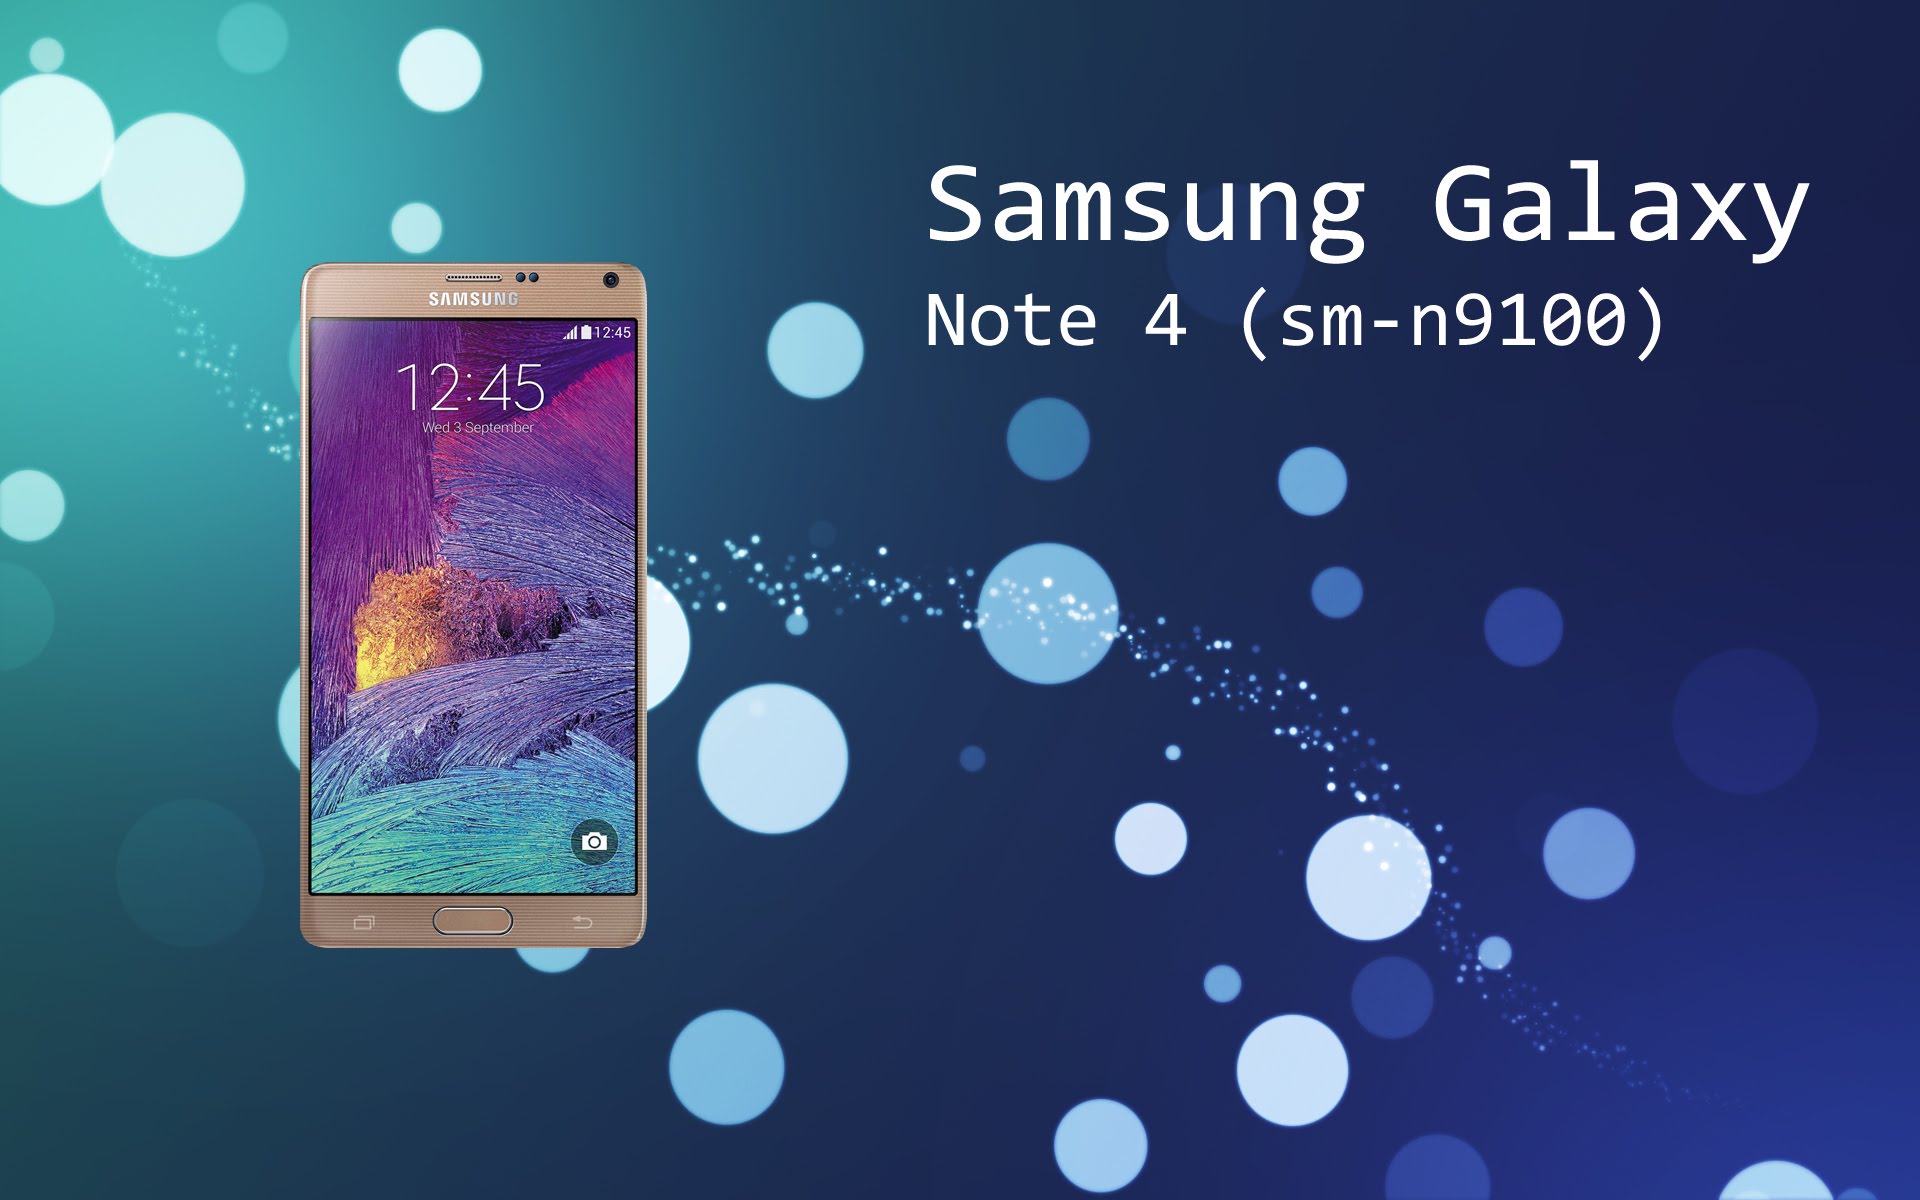 [Clone] Flash Stock Rom on Samsung Galaxy Note 4 Duos SM-n9100